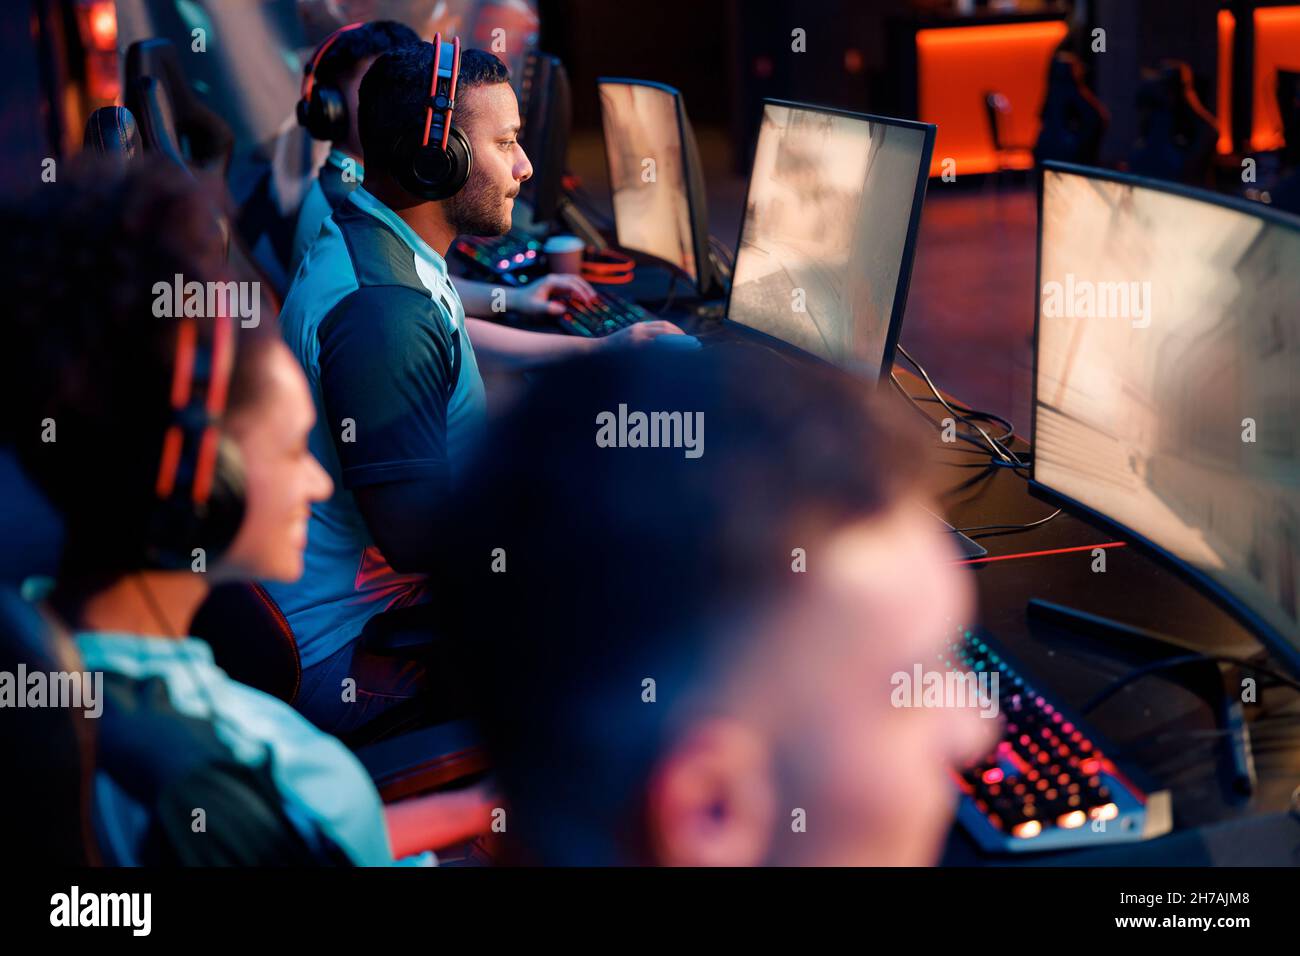 Cybersport Team Teilnahme an Online-Turnier im Gaming-Club Stockfoto